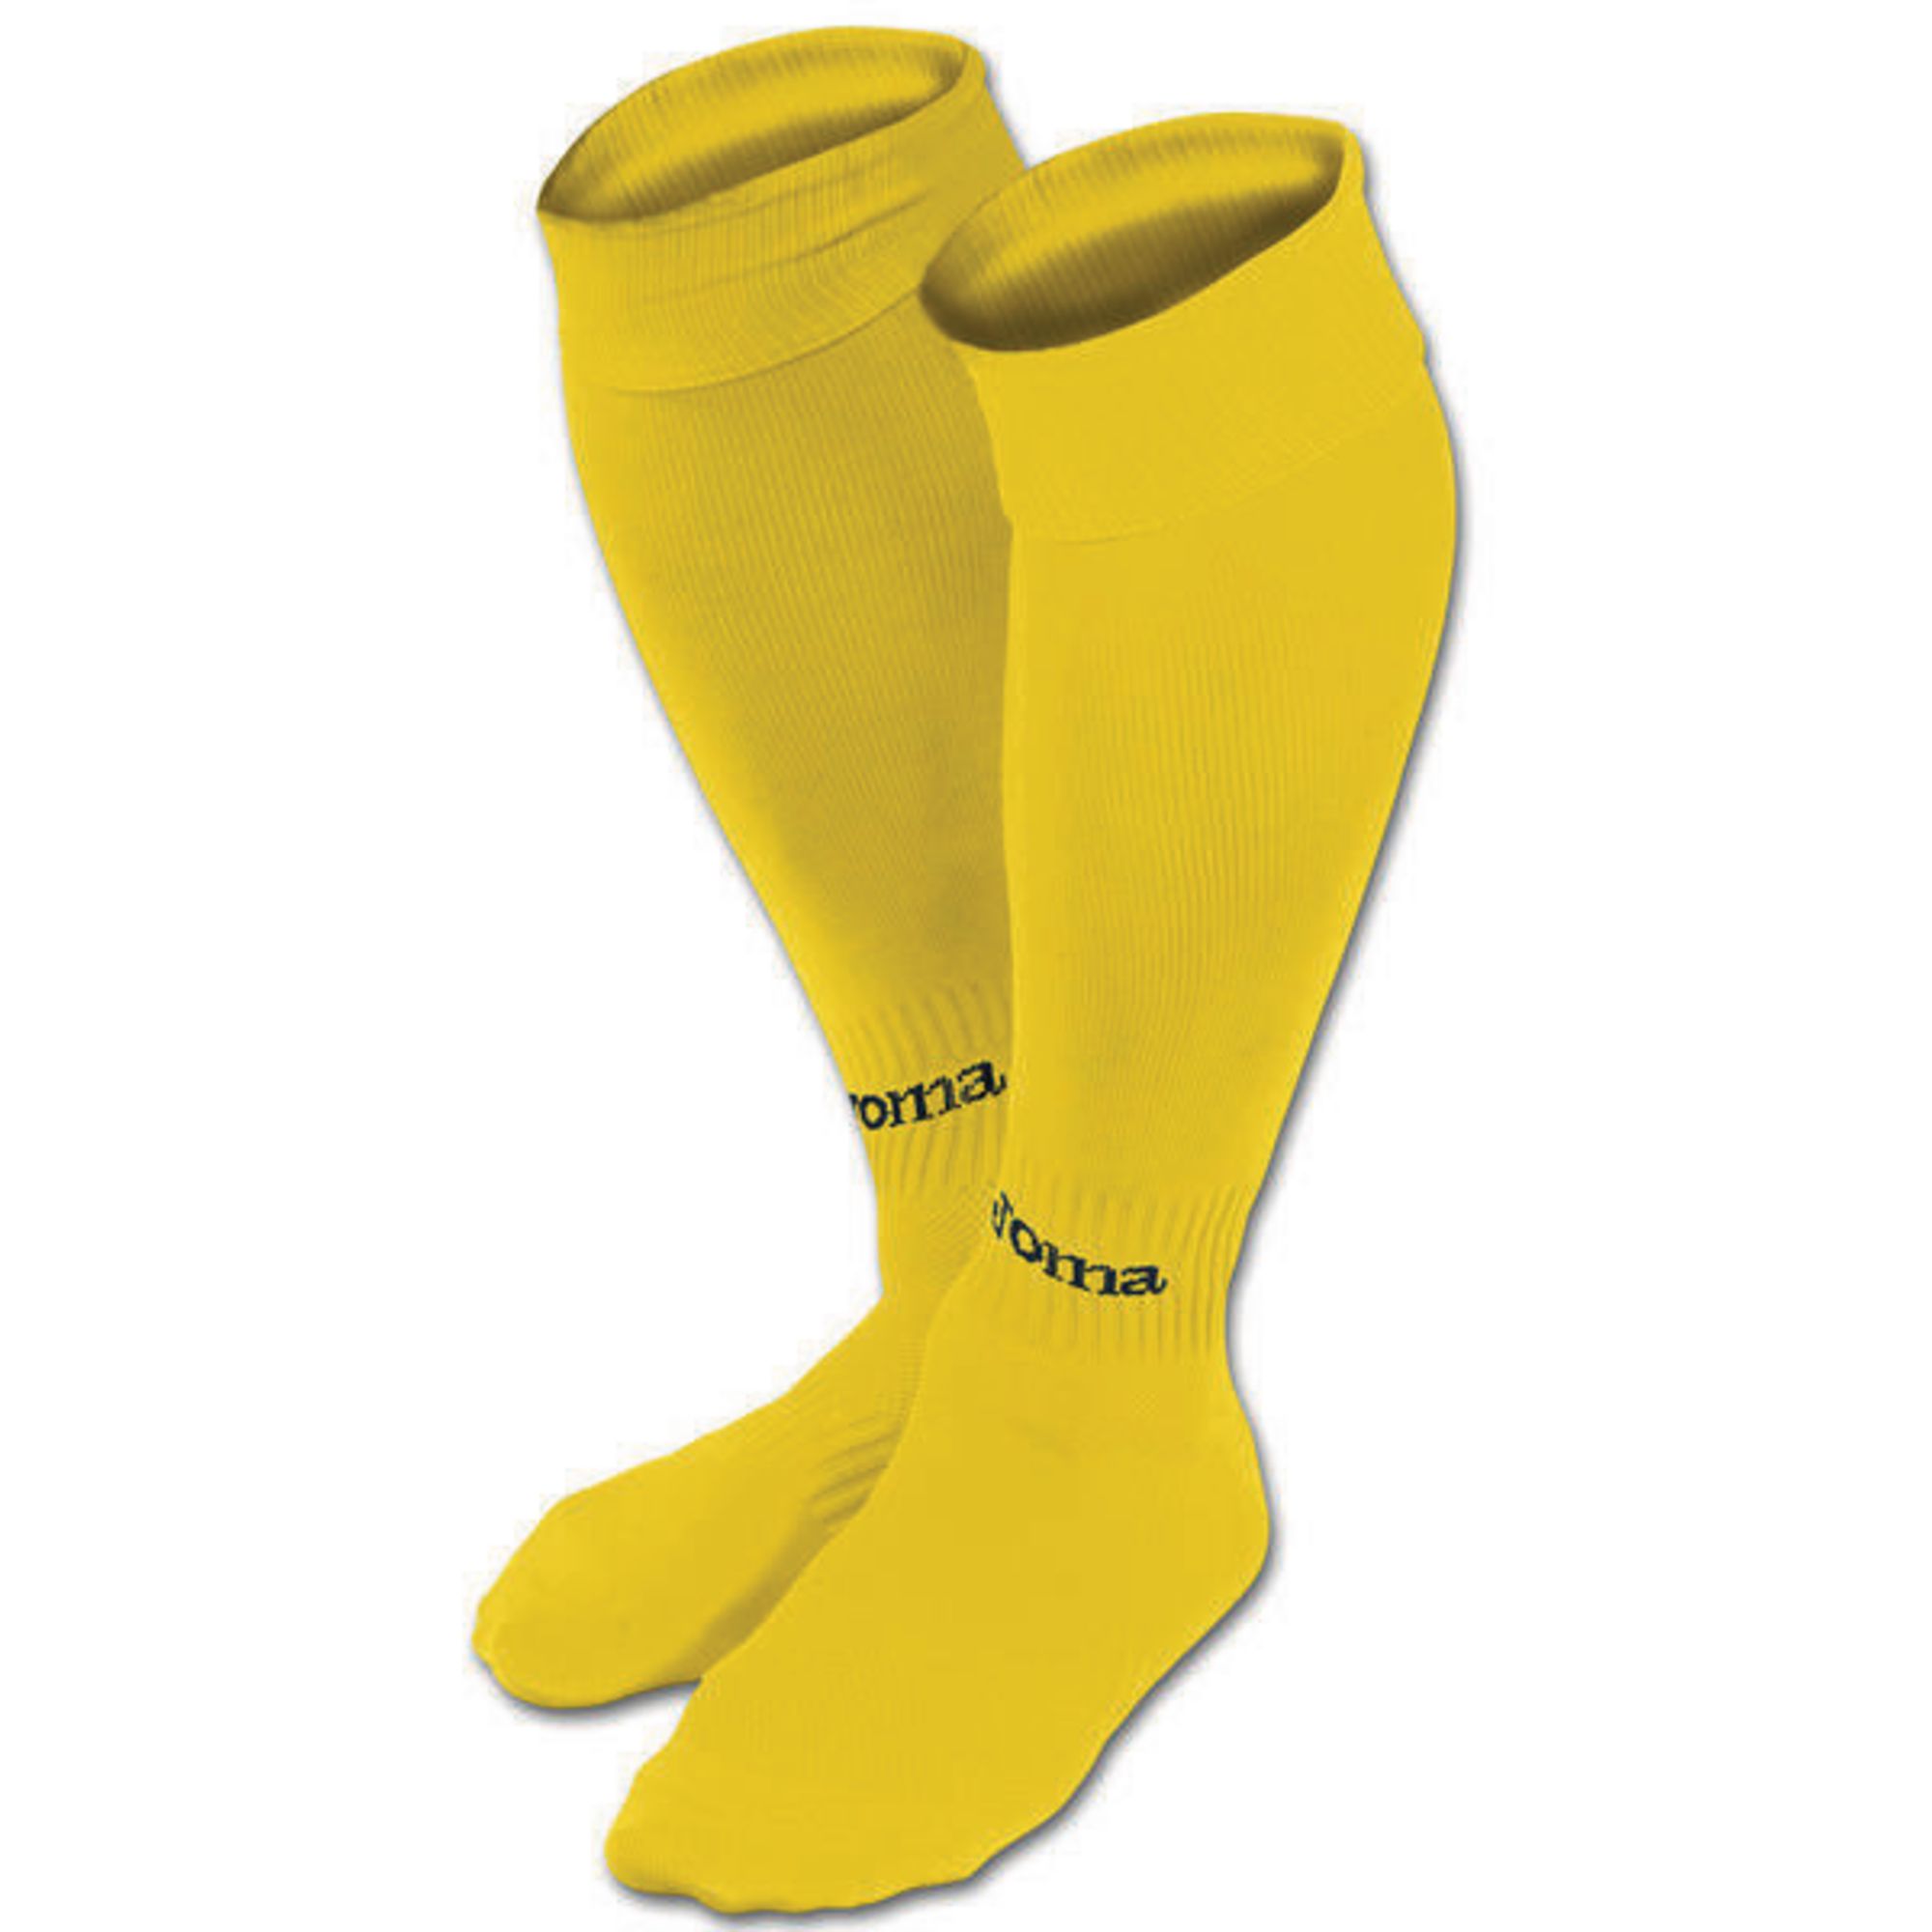 Joma Classic Socks Large 6-11 Vat Yellow